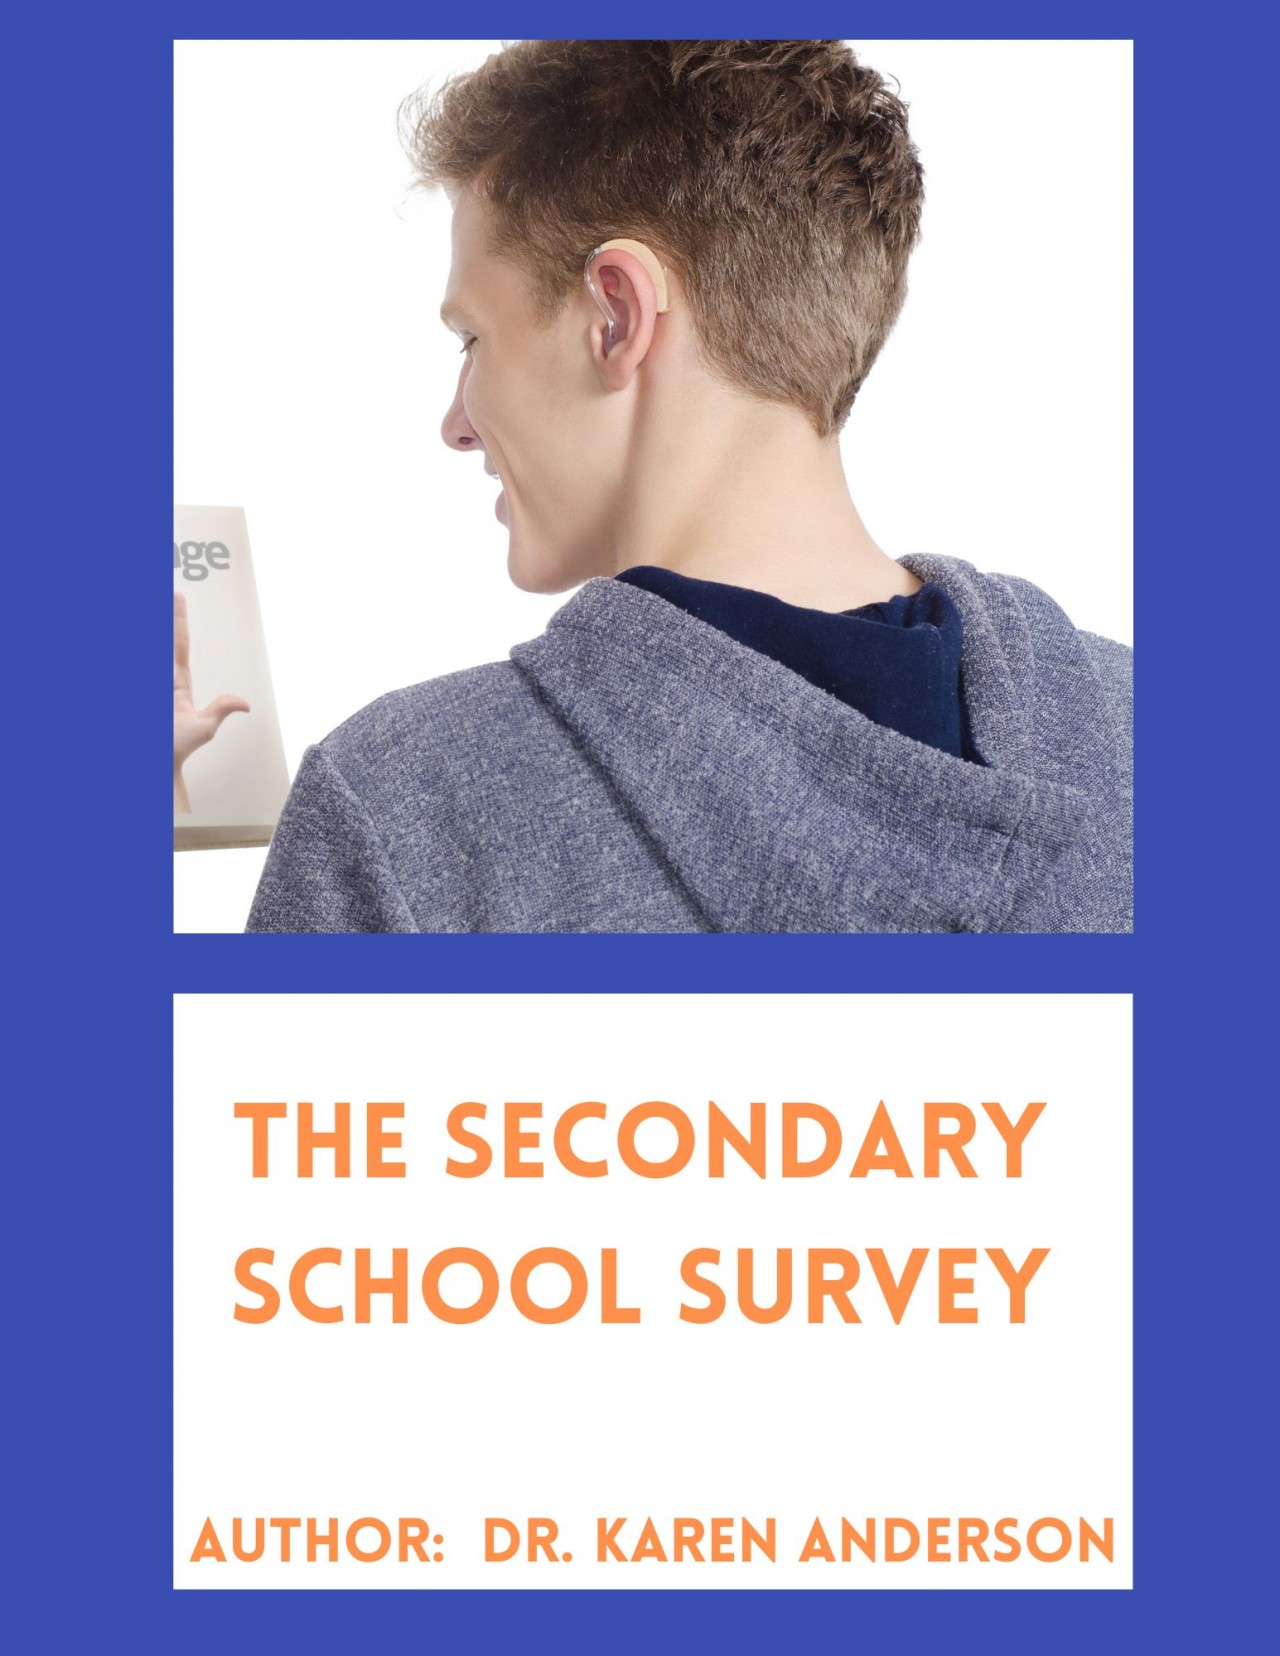 The Secondary School Survey